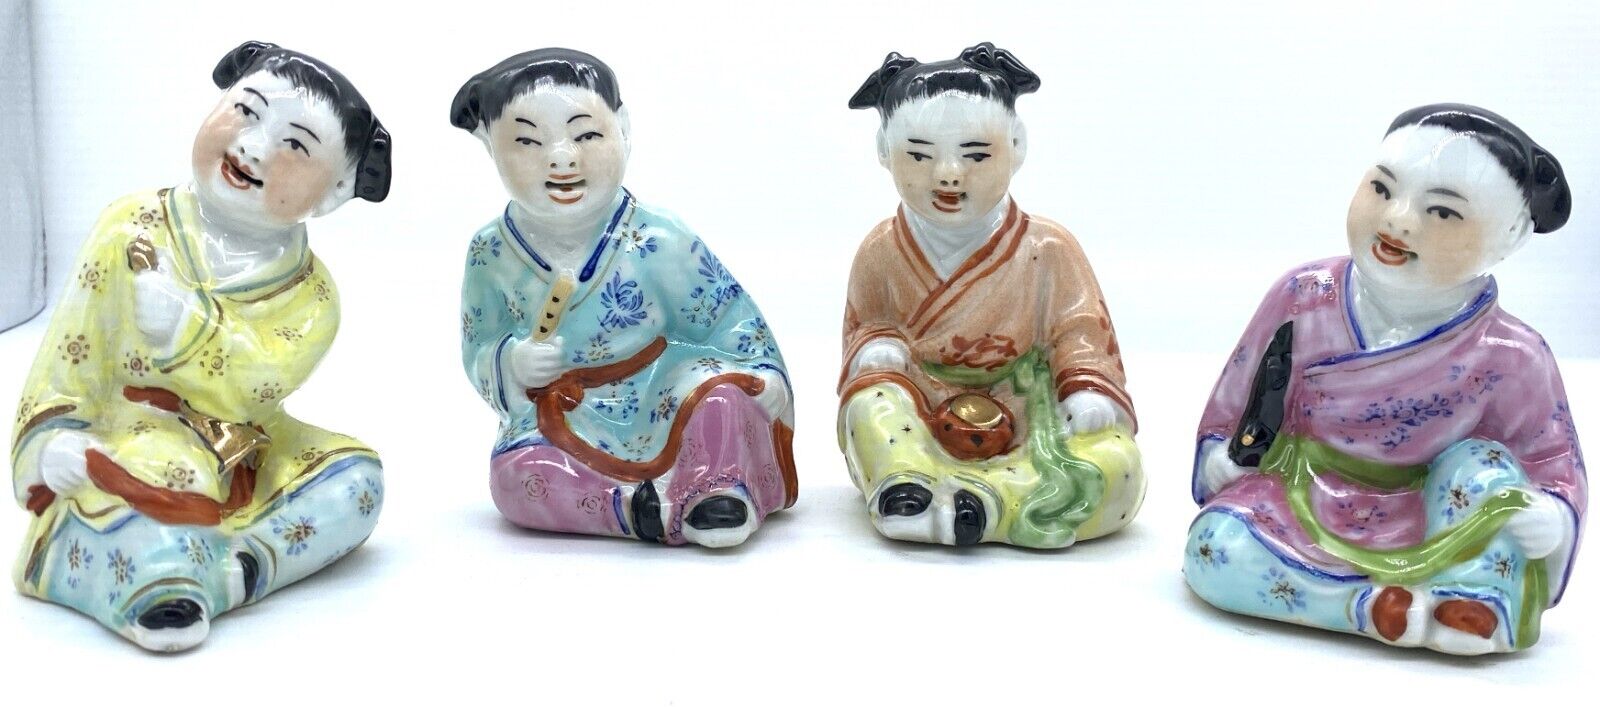 Vintage Chinese Jingdezhen Porcelain Figurine Children (Set of 4)